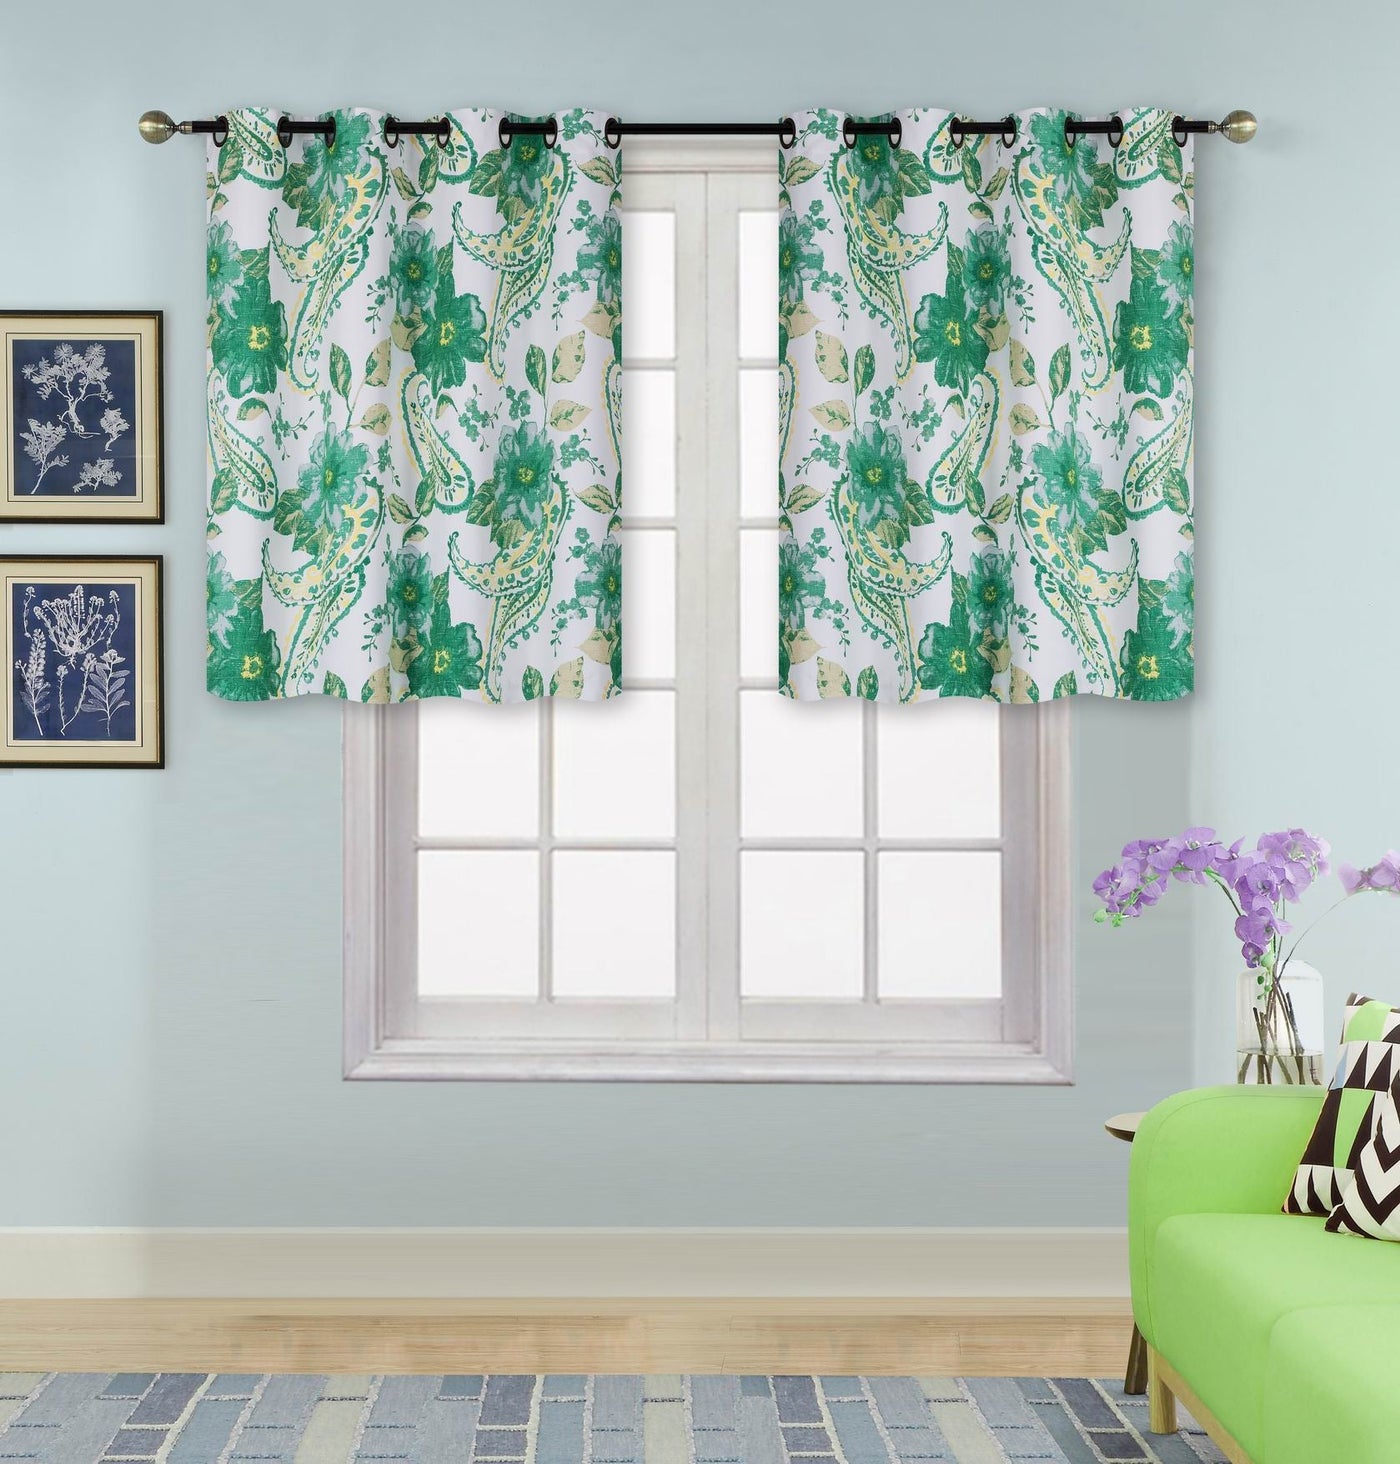 teal kitchen curtains